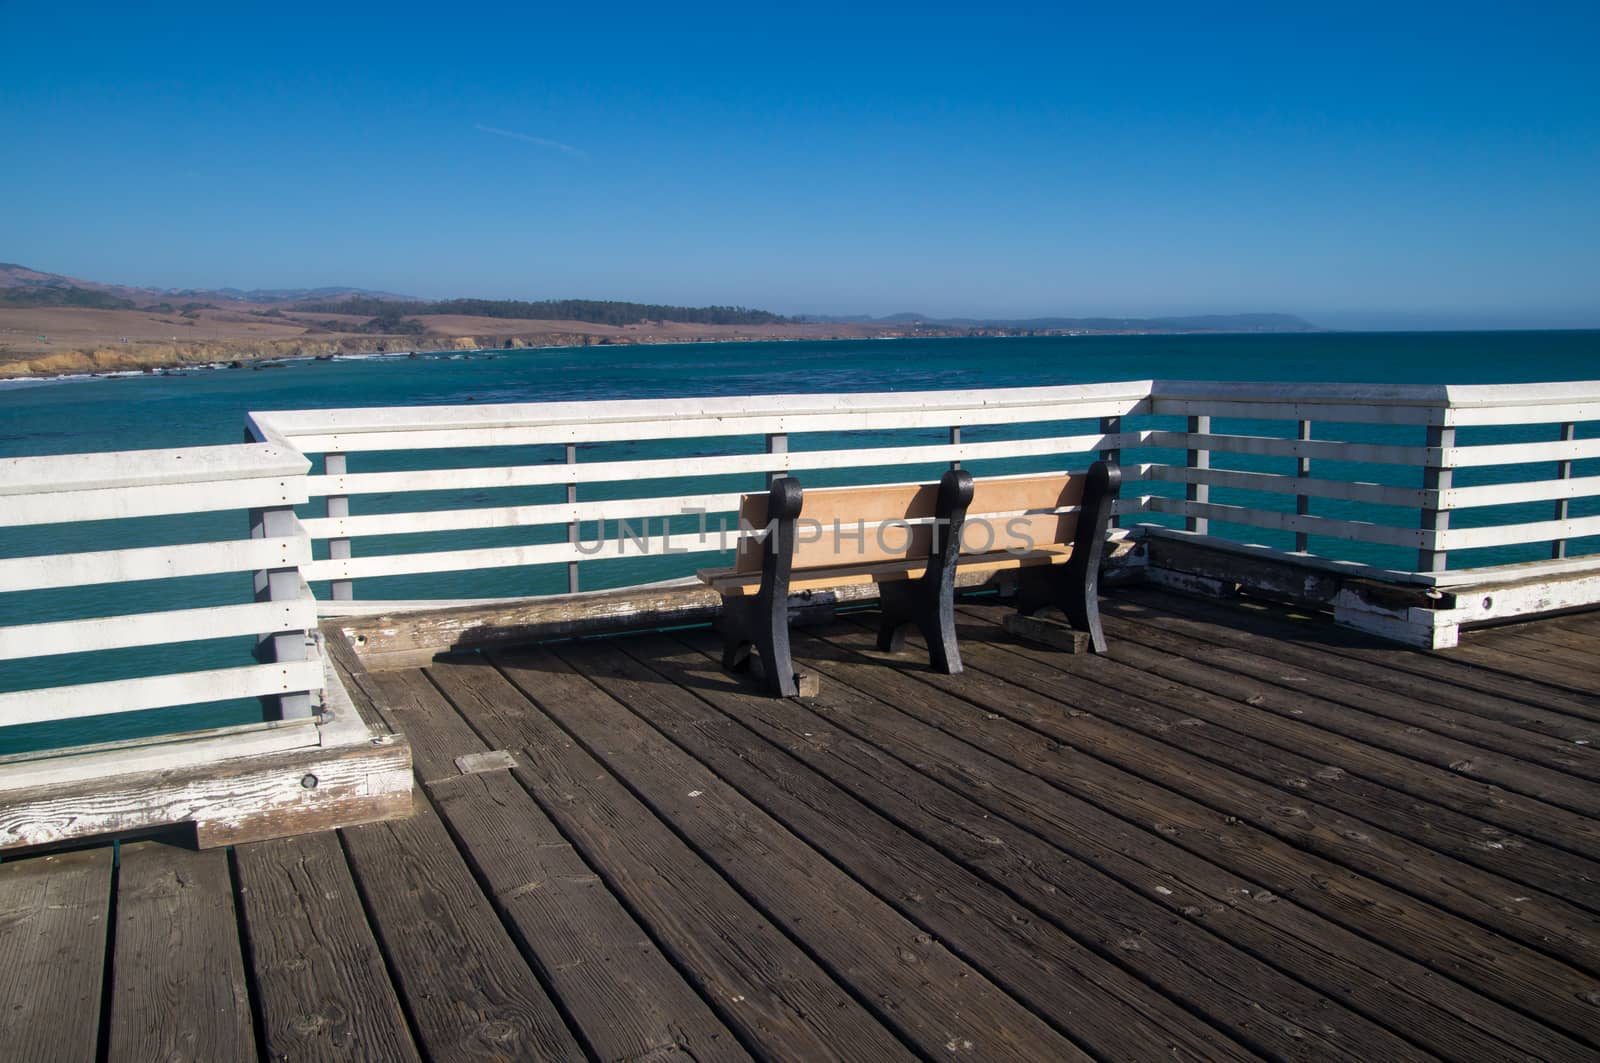 Bench on pier overlooks California coastline